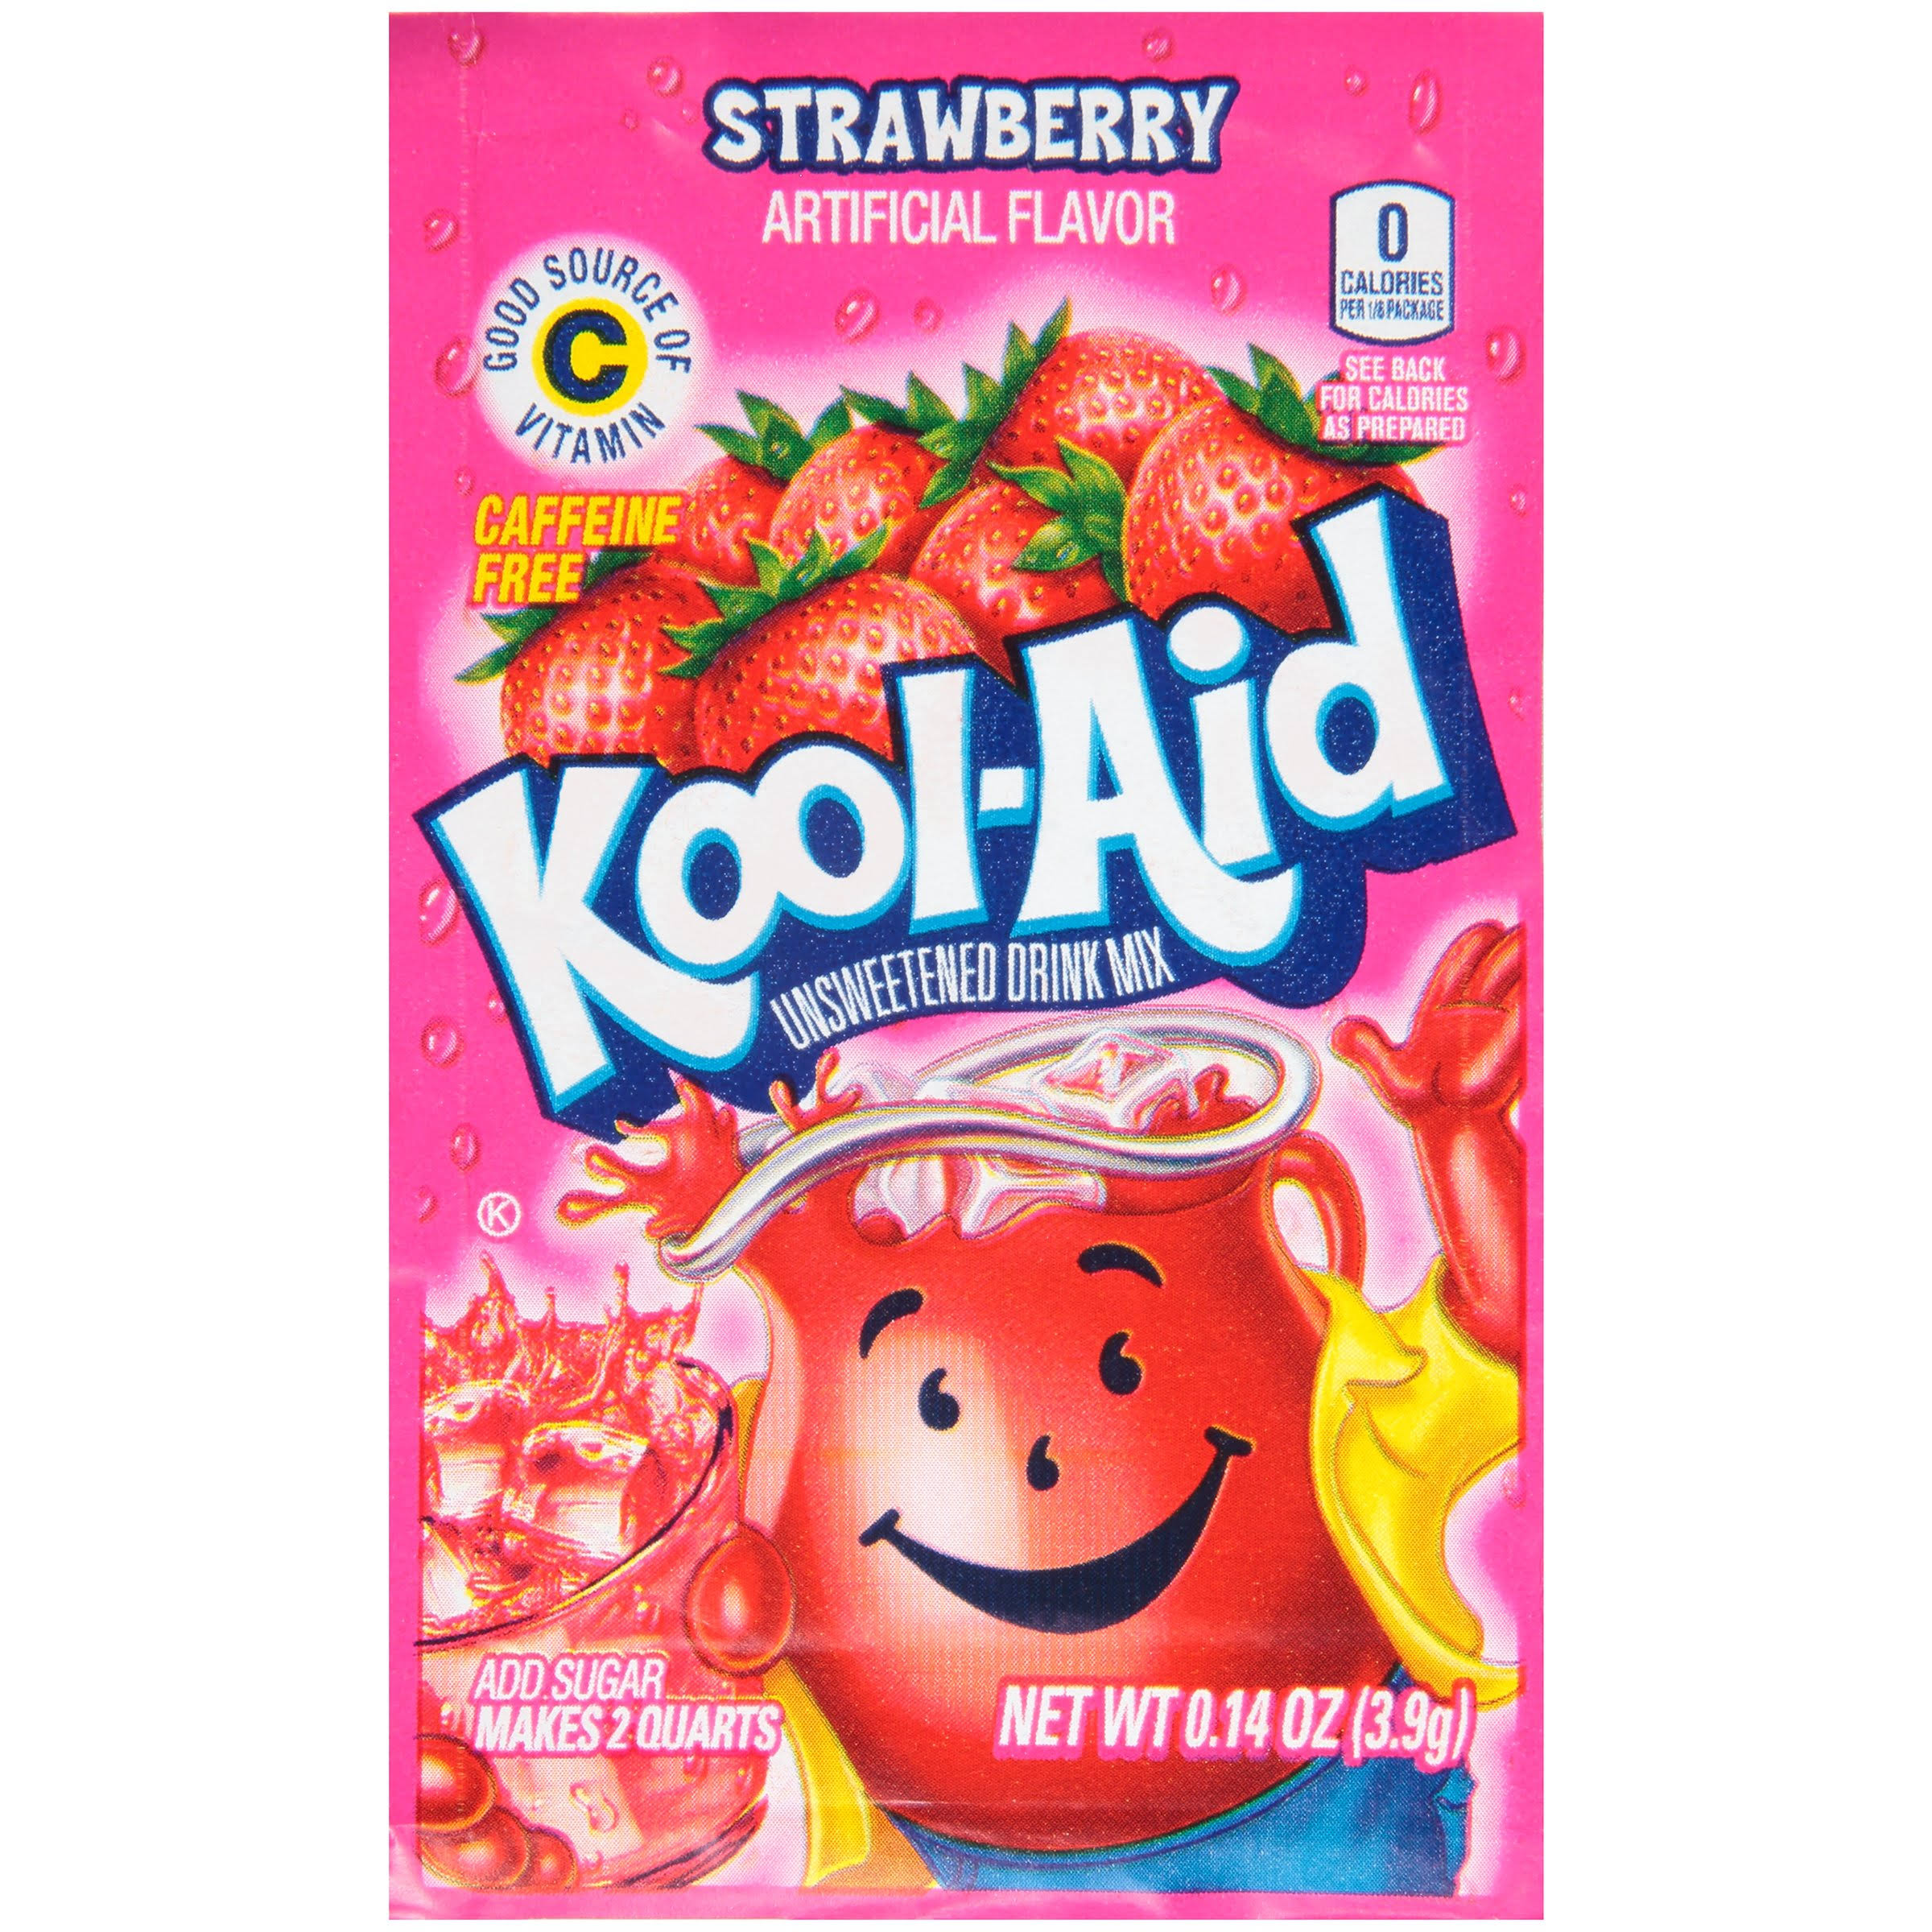 Kool-Aid Flavored Drink Mix - Strawberry, 0.14oz